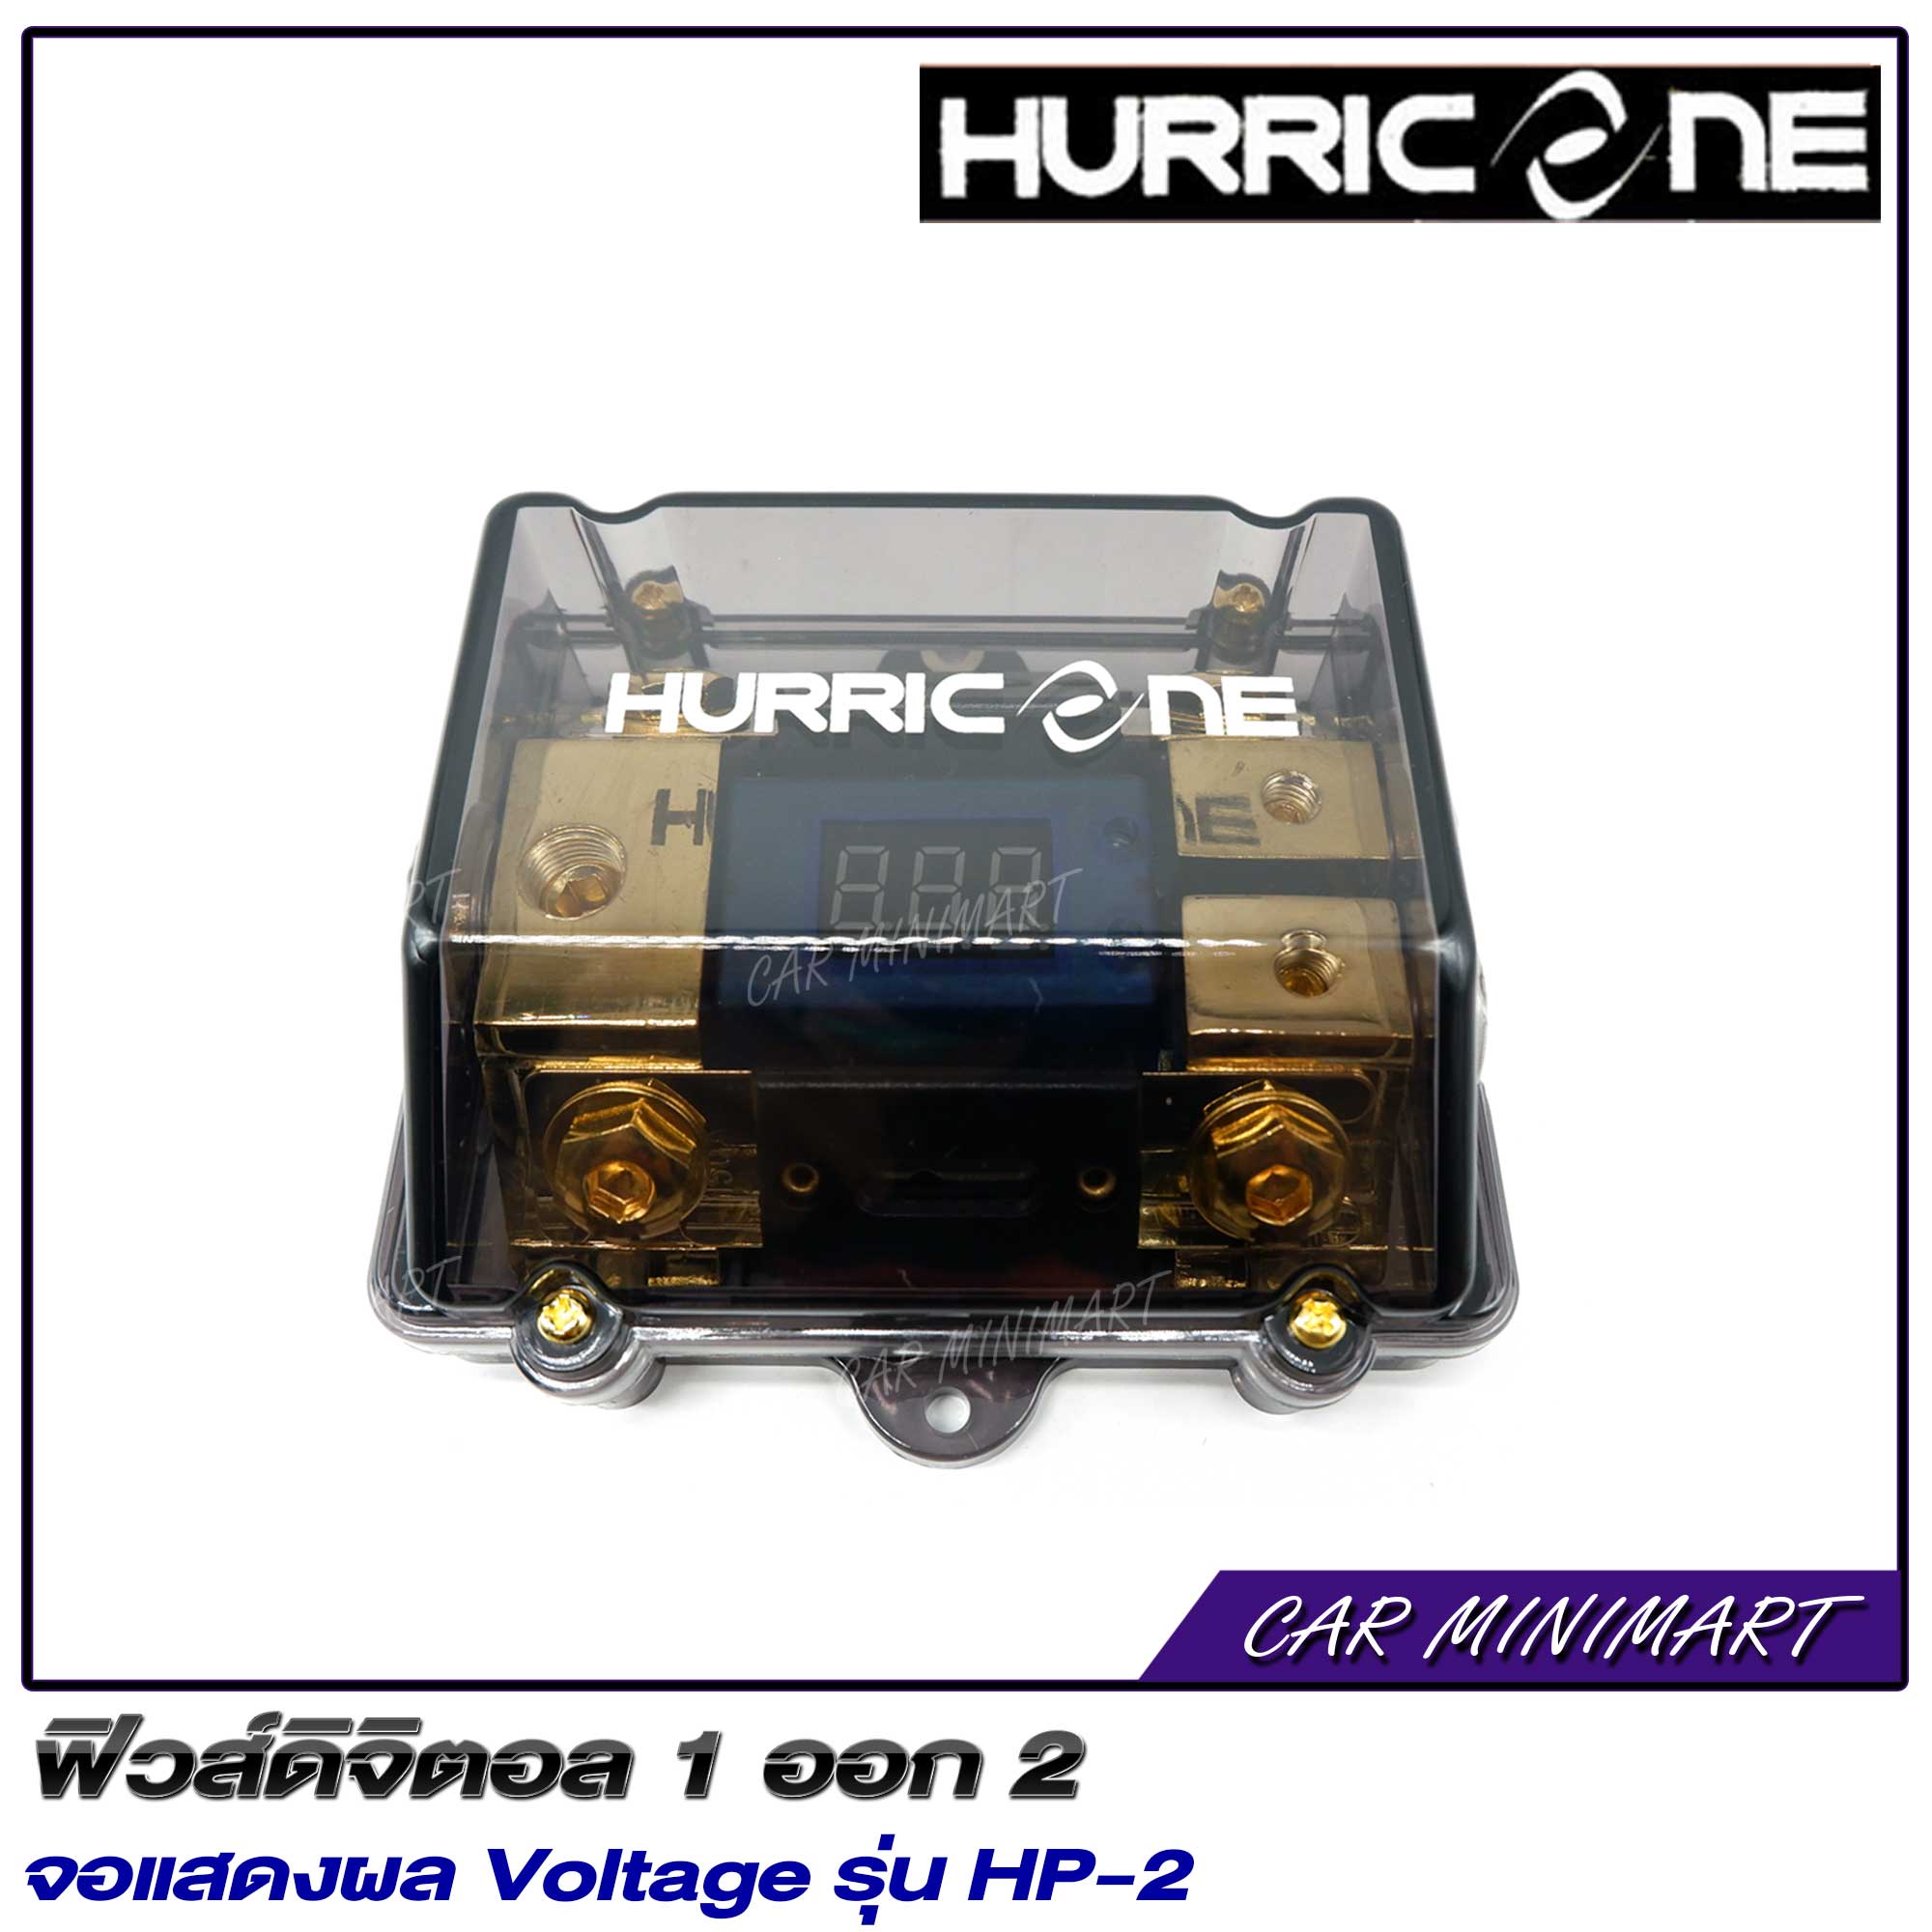 Hurricane ฟิวส์ดิจิตอล 1 ออก 2 มีจอแสดงผล Voltage รุ่น HP-2